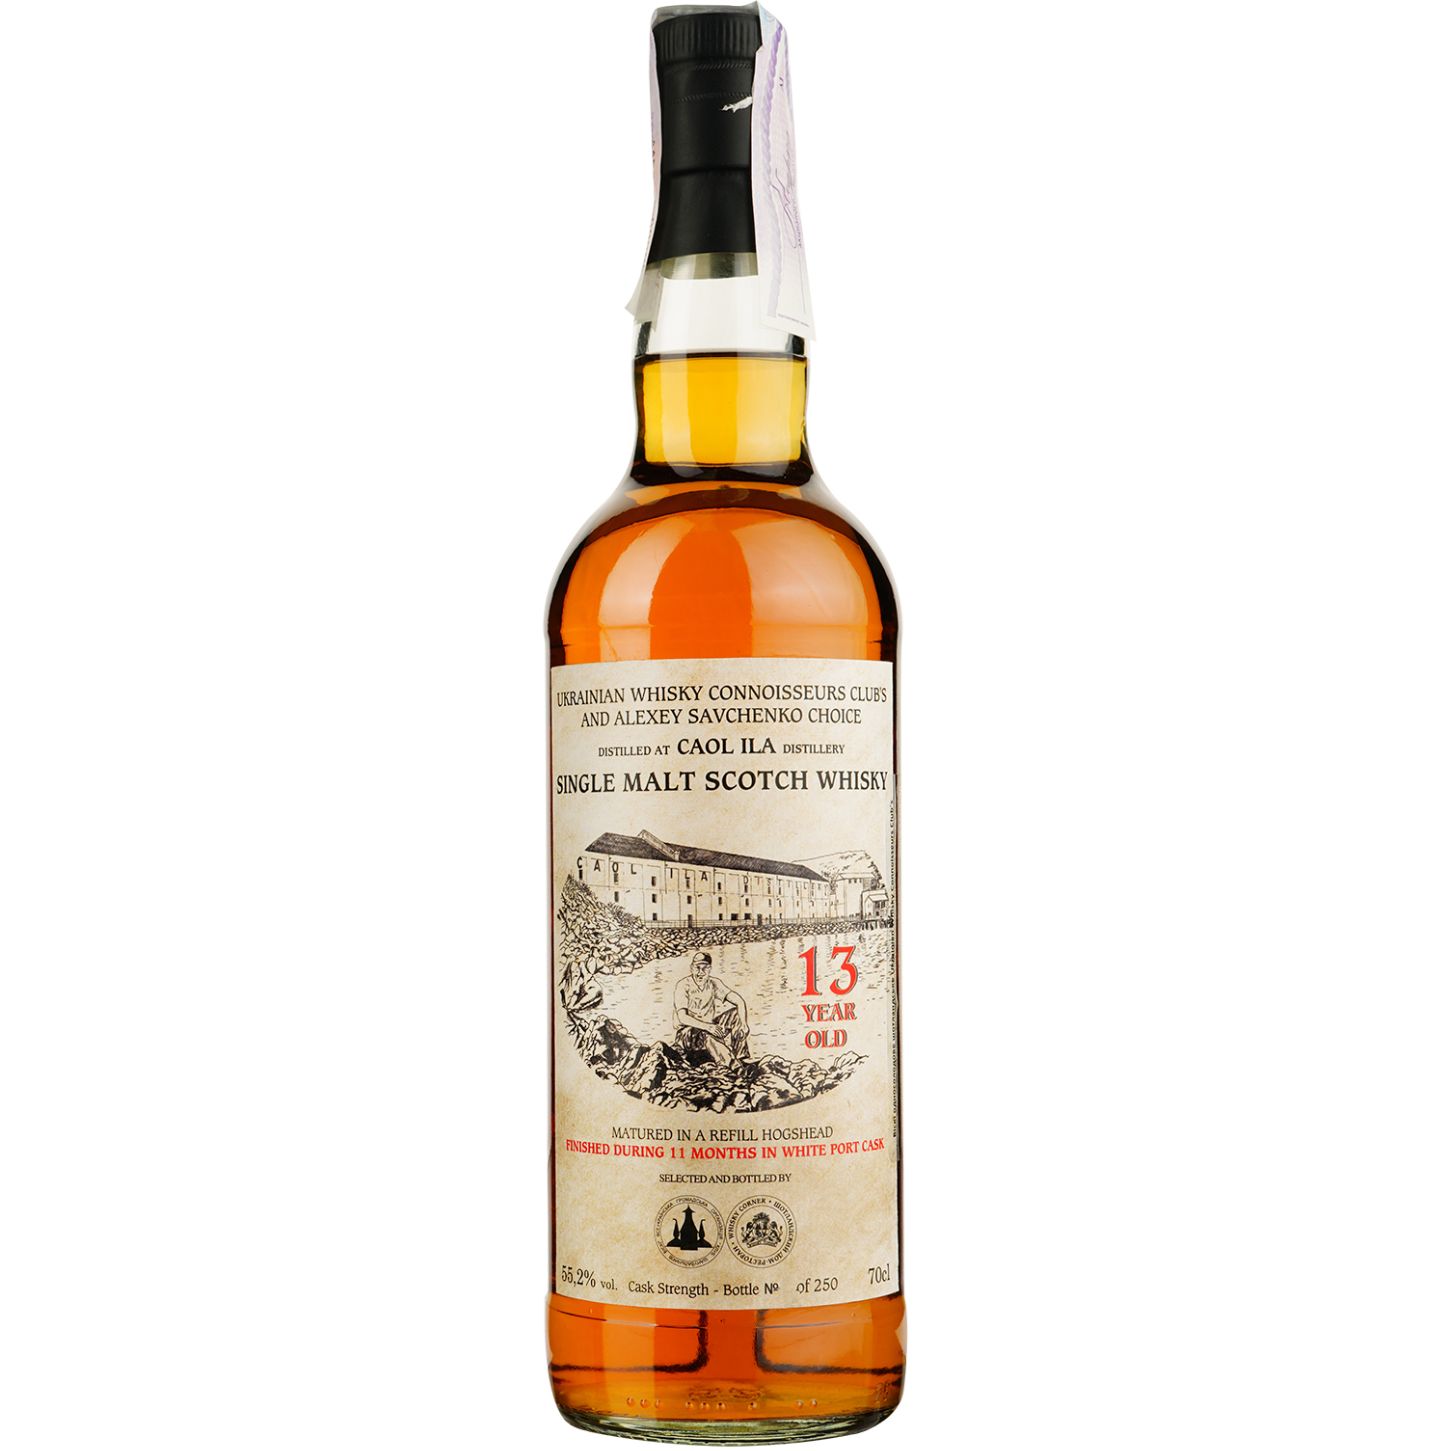 Виски Caol Ila 13 Years Old White Porto Single Malt Scotch Whisky, в подарочной упаковке, 55,2%, 0,7 л - фото 2